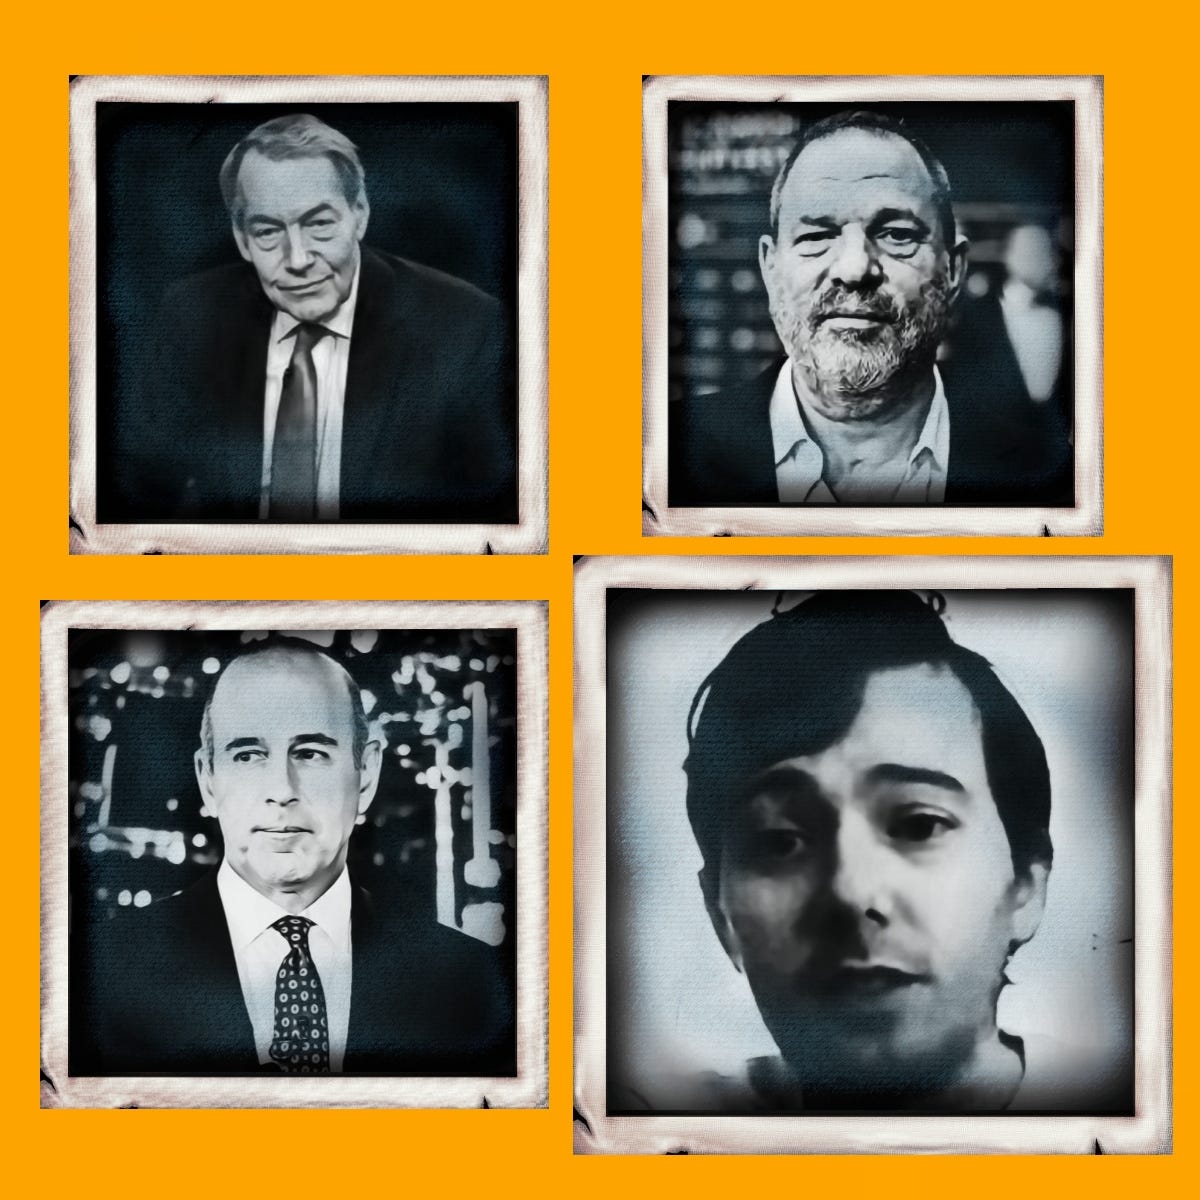 Clockwise from top left: Charlie Rose, Harvey Weinstein, Martin Shkreli, and Matt Lauer.